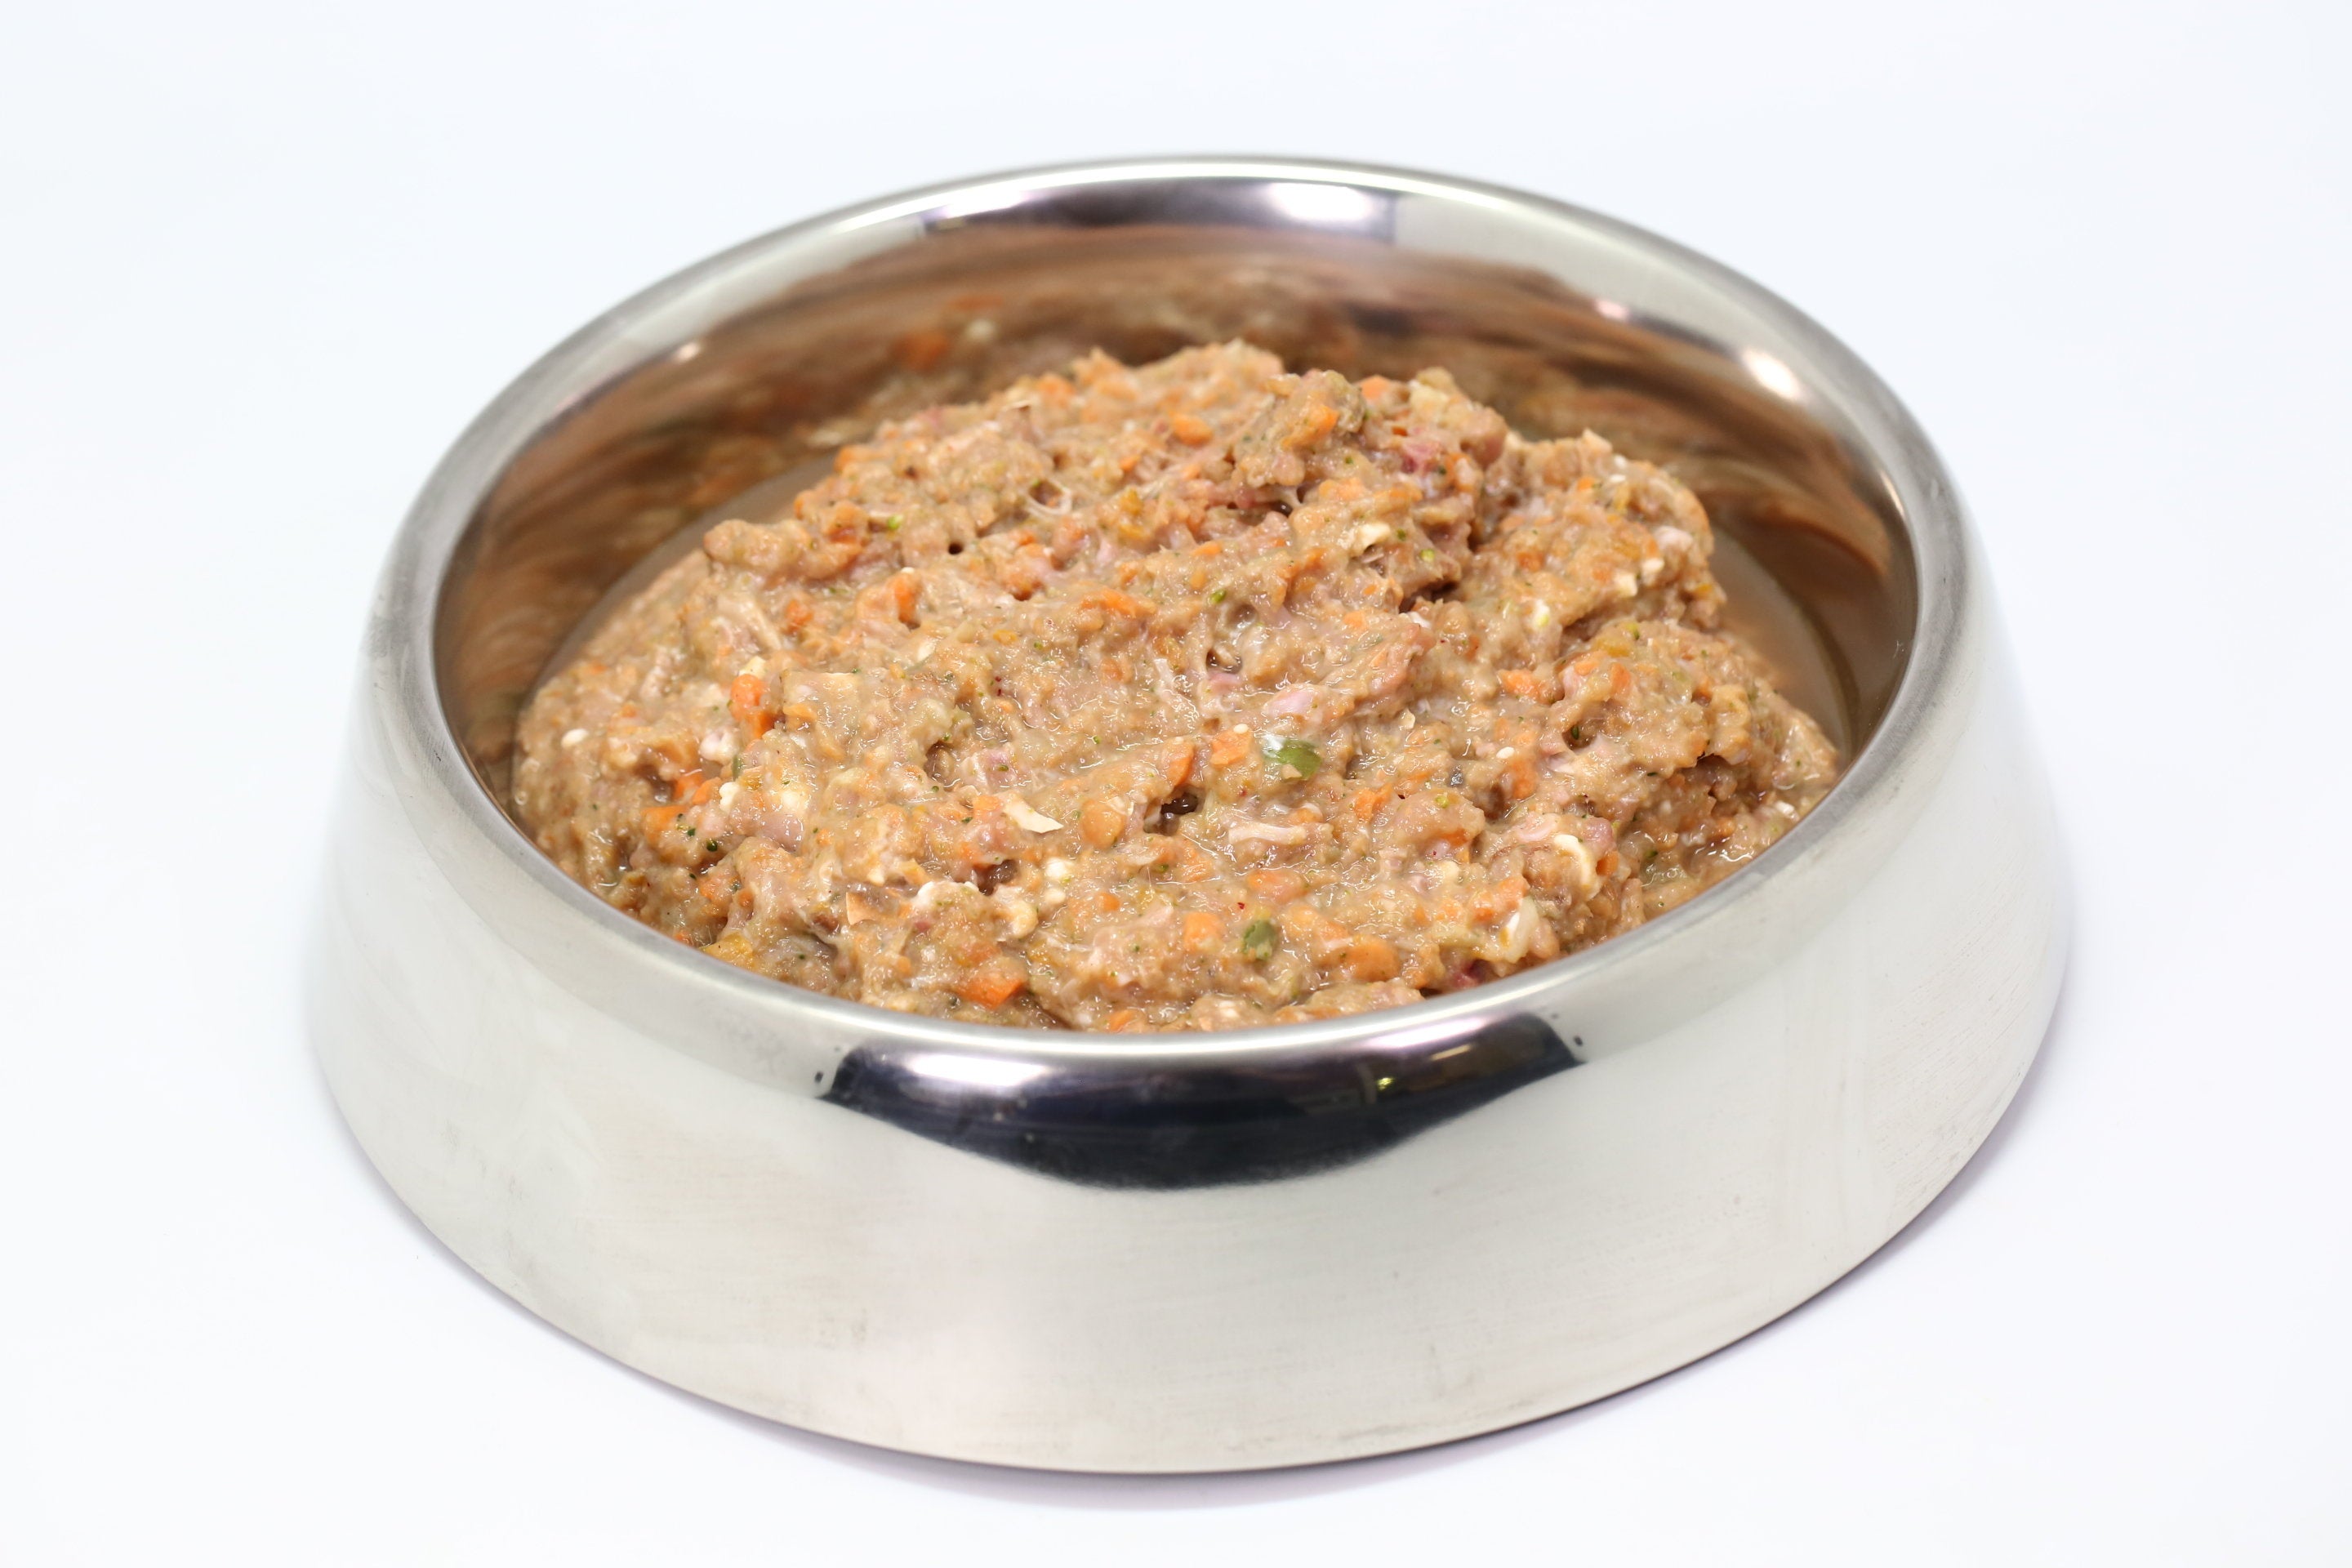 Somerford Raw & Natural - Low Purine Puppy Food Hunter Valley Turkey & Veg Pack + FREE Meaty Bones